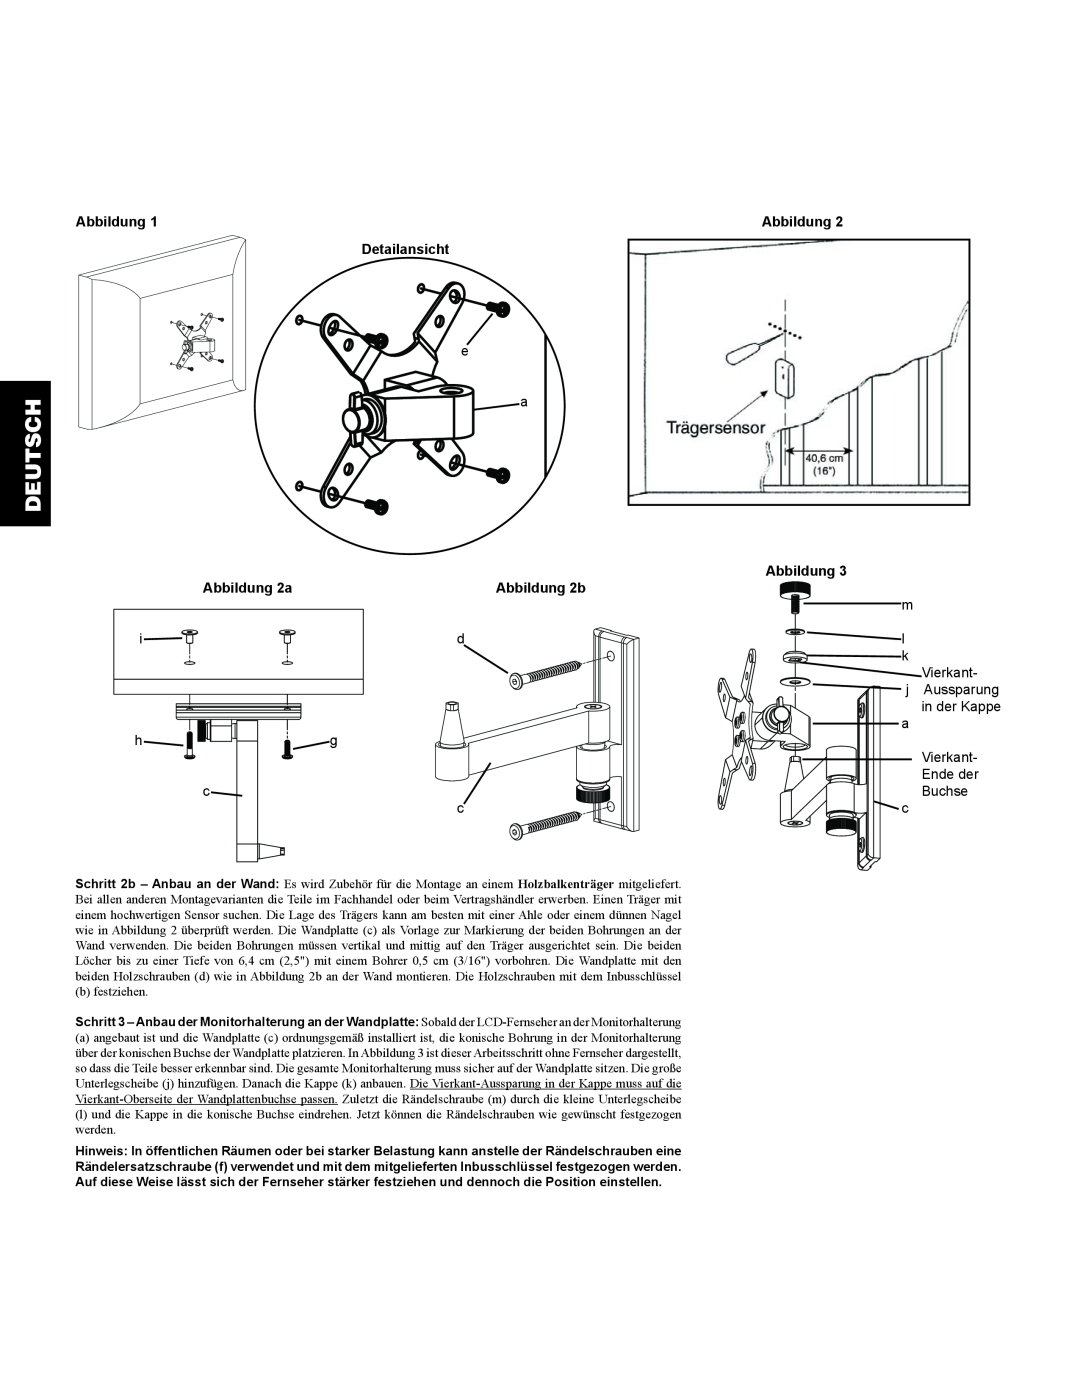 Sanus Systems VM2 manual Deutsch, Detailansicht, Abbildung 2a 